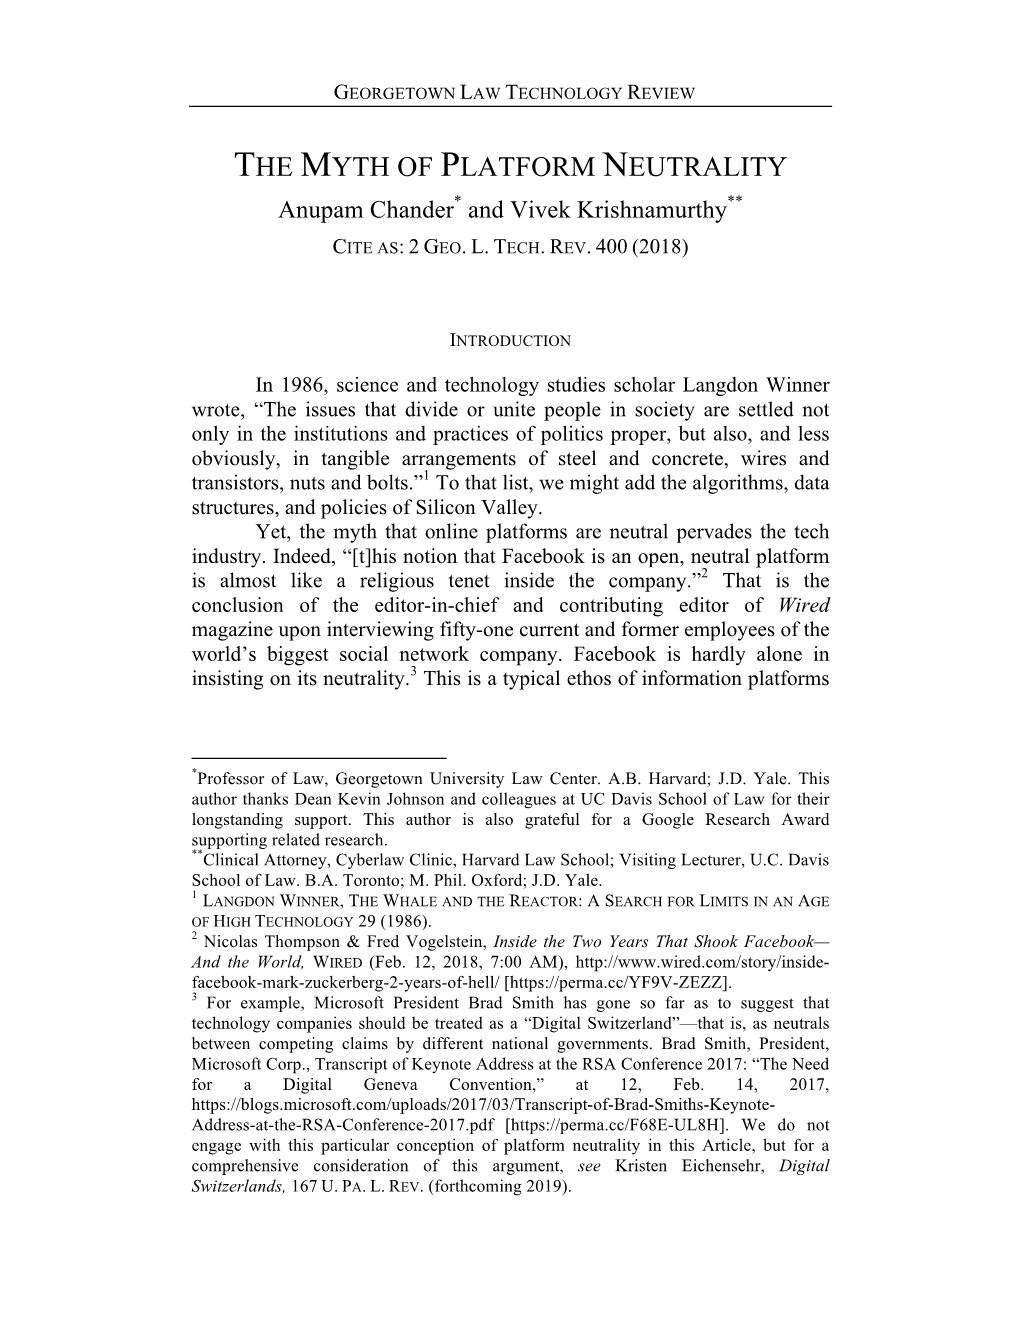 THE MYTH of PLATFORM NEUTRALITY Anupam Chander* and Vivek Krishnamurthy** CITE AS: 2 GEO